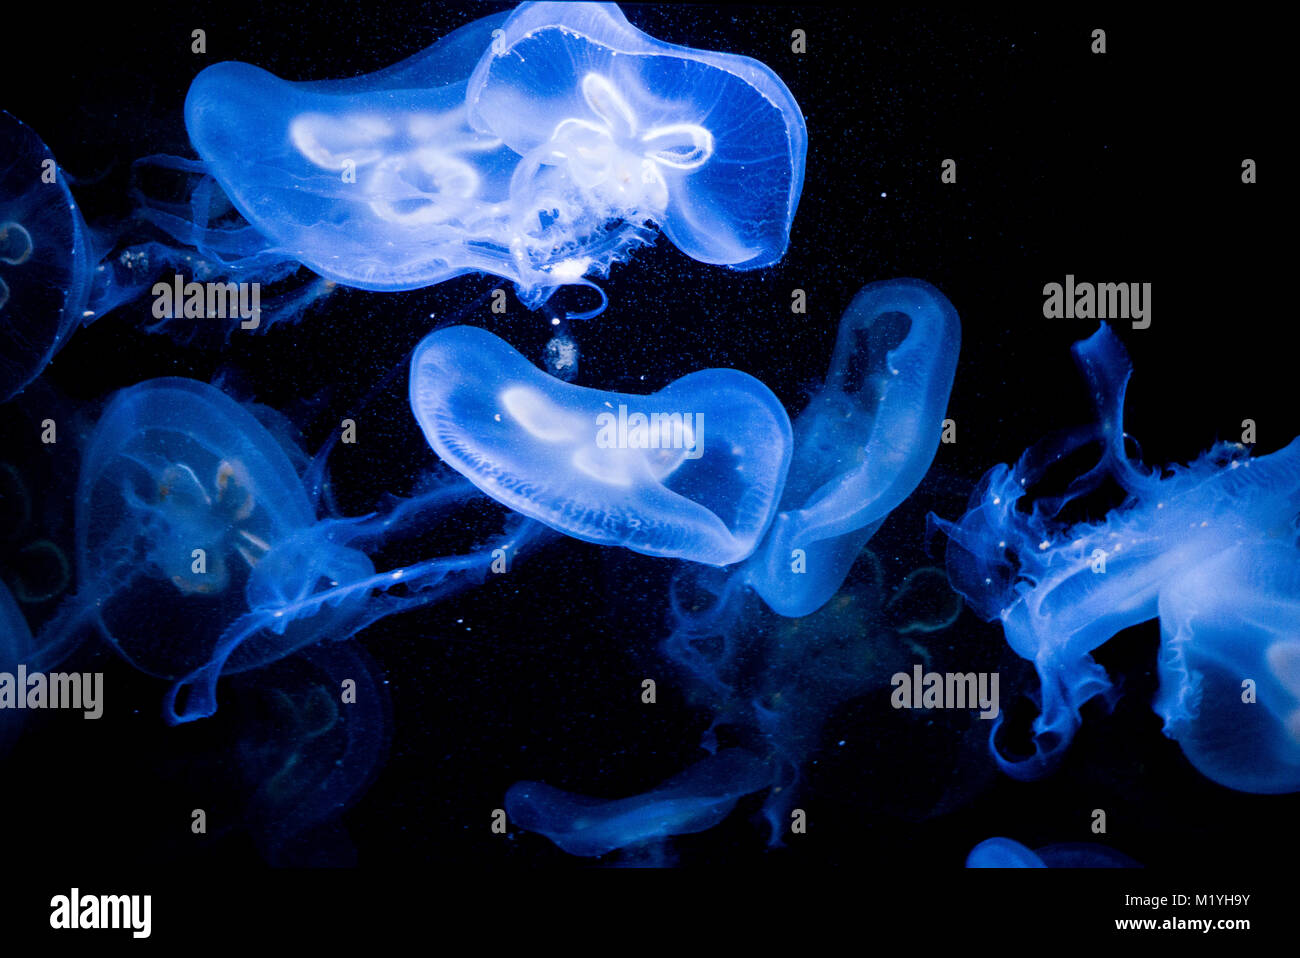 Jellyfish in impressive display of bioluminescence Stock Photo